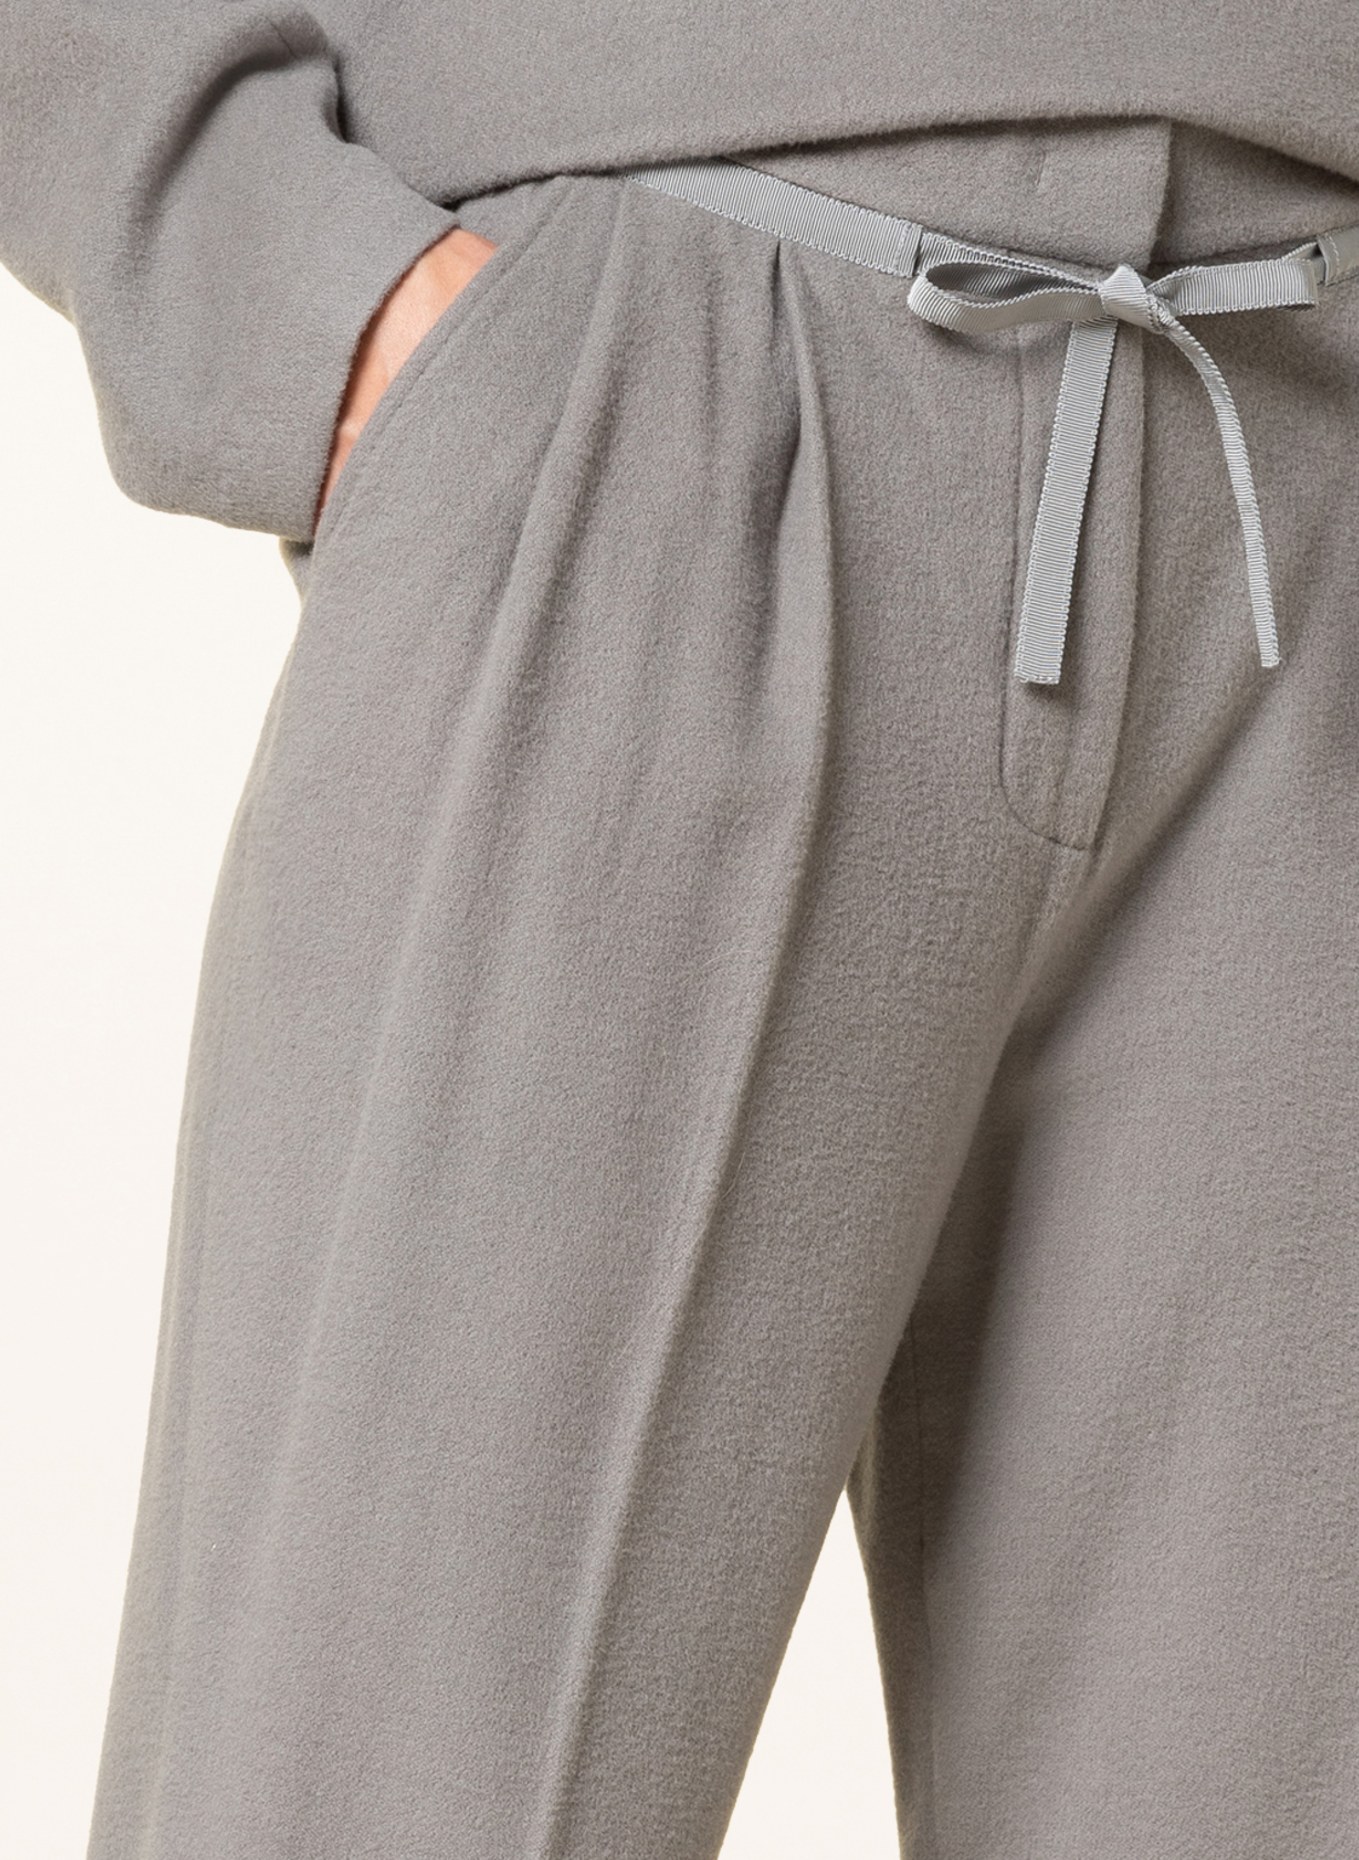 EMPORIO ARMANI Trousers in jogger style, Color: GRAY (Image 5)